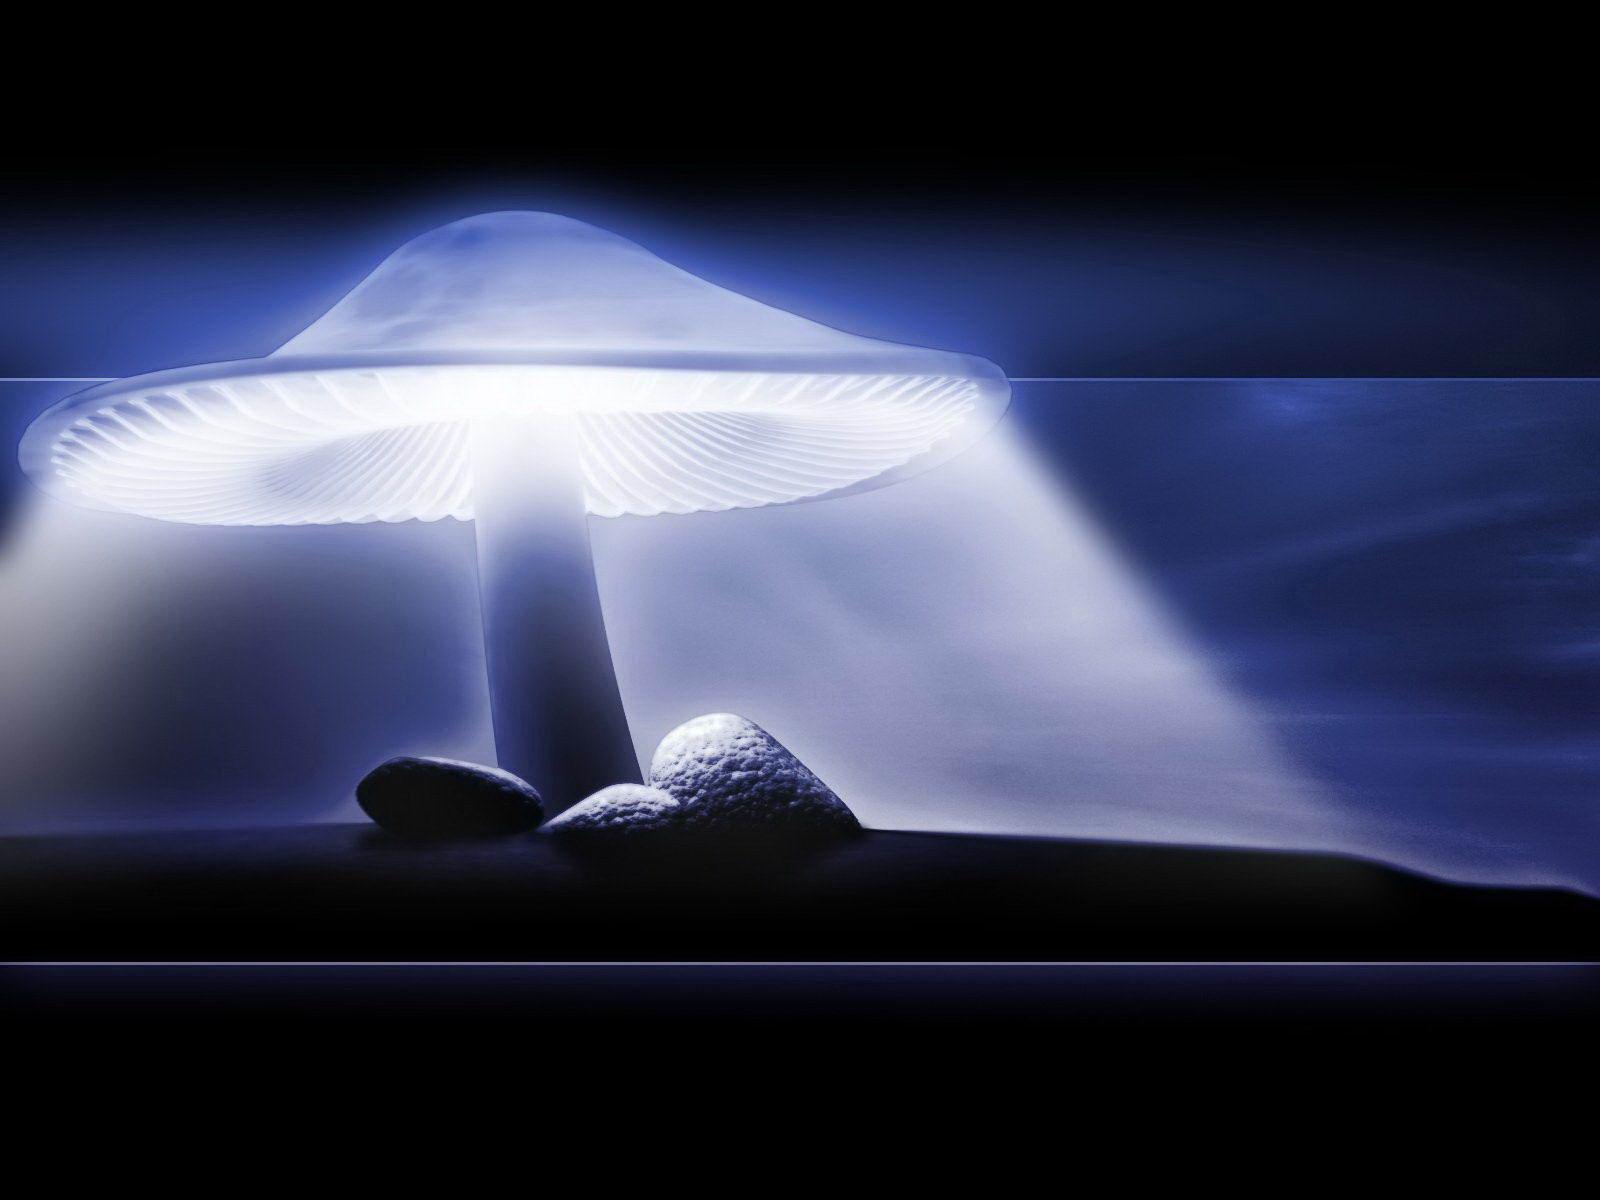 Neon 3D mushroom fantasy free desktop background wallpaper